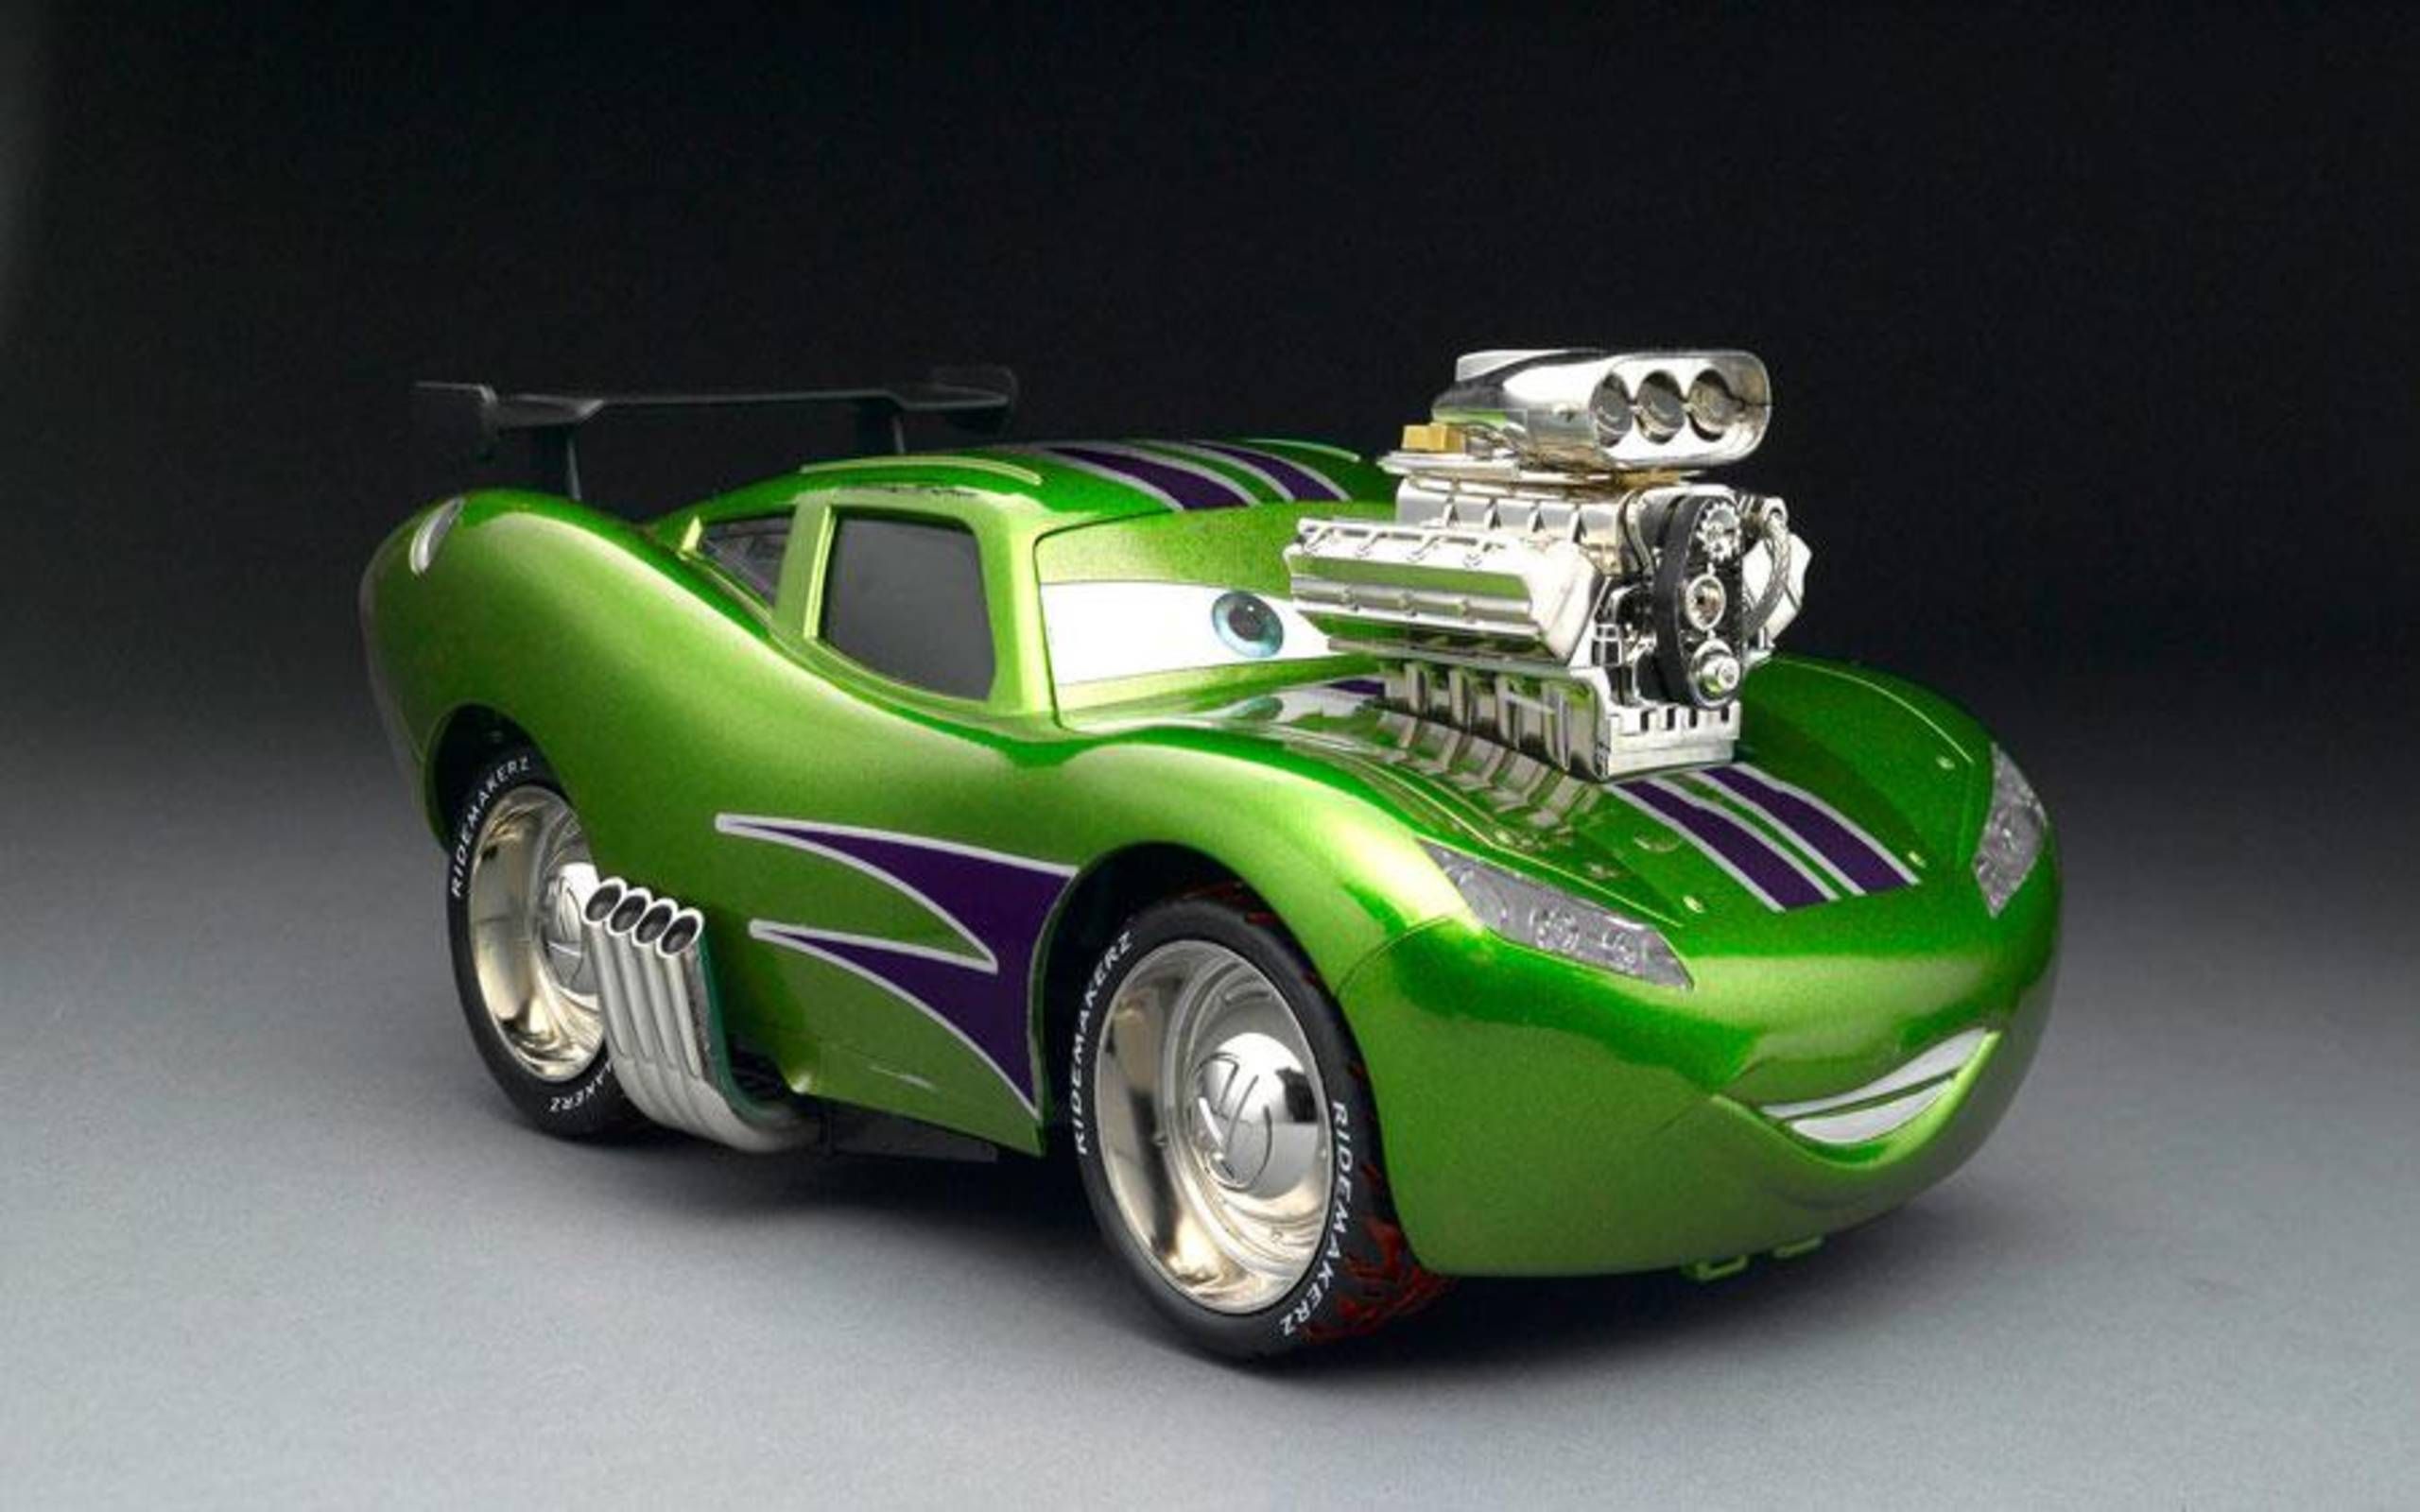 Disney Pixar Cars 2 Hot Rod Lightning McQueen RideMakerz Green Exclusive New